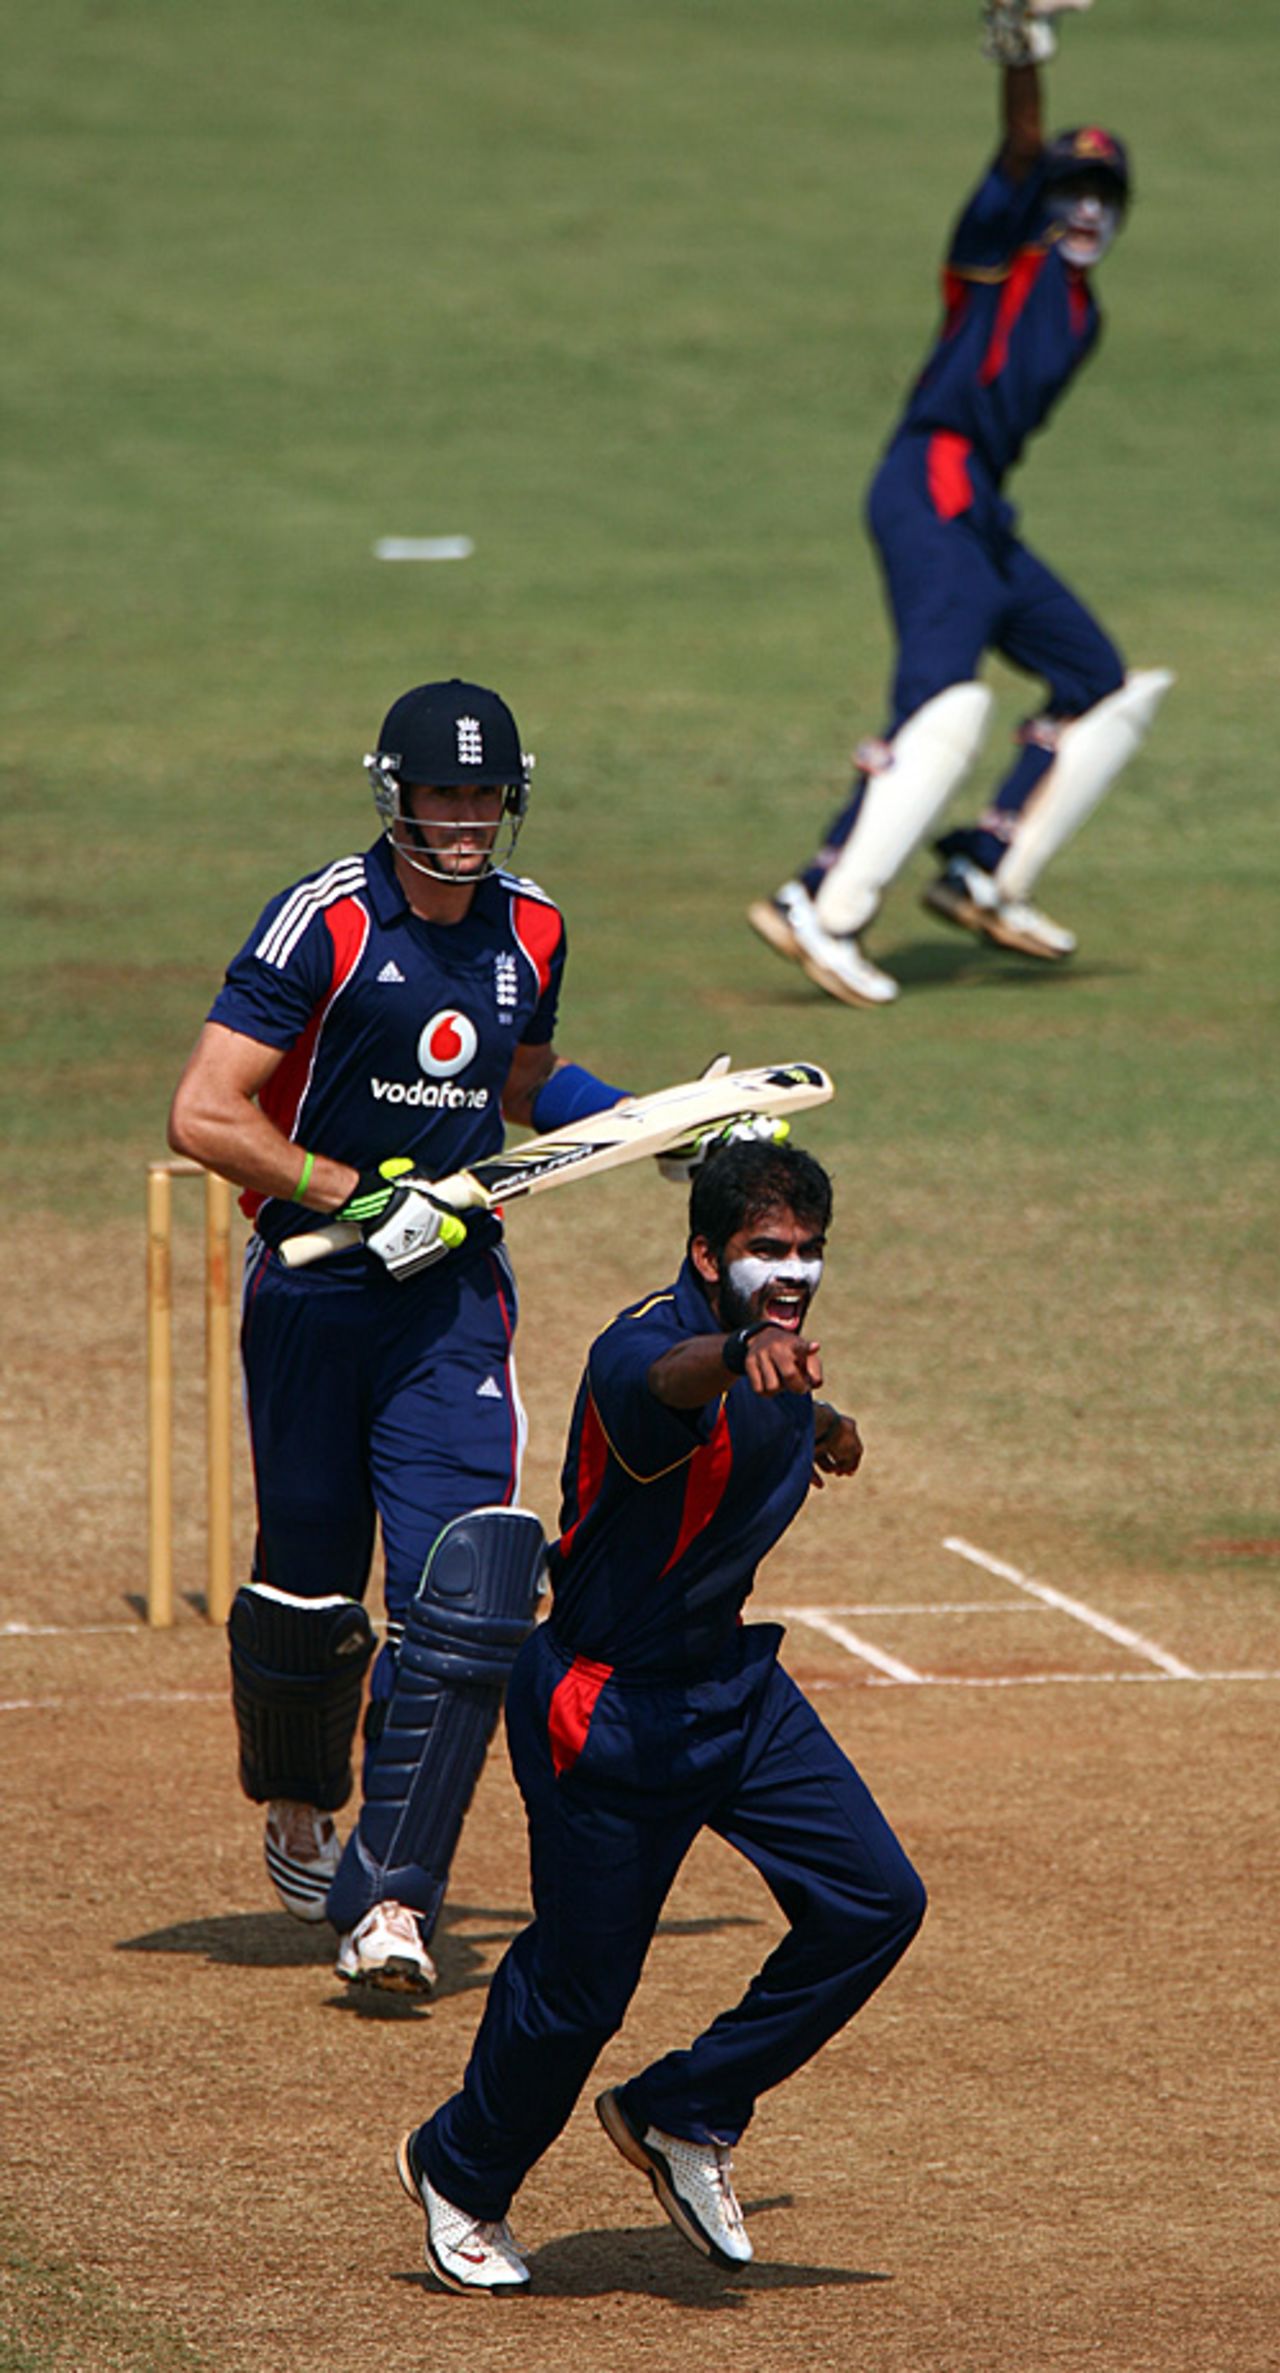 Kshemal Waingankar appeals for the wicket of Kevin Pietersen, Mumbai Cricket Association President's XI v England XI, Mumbai, November 11, 2008